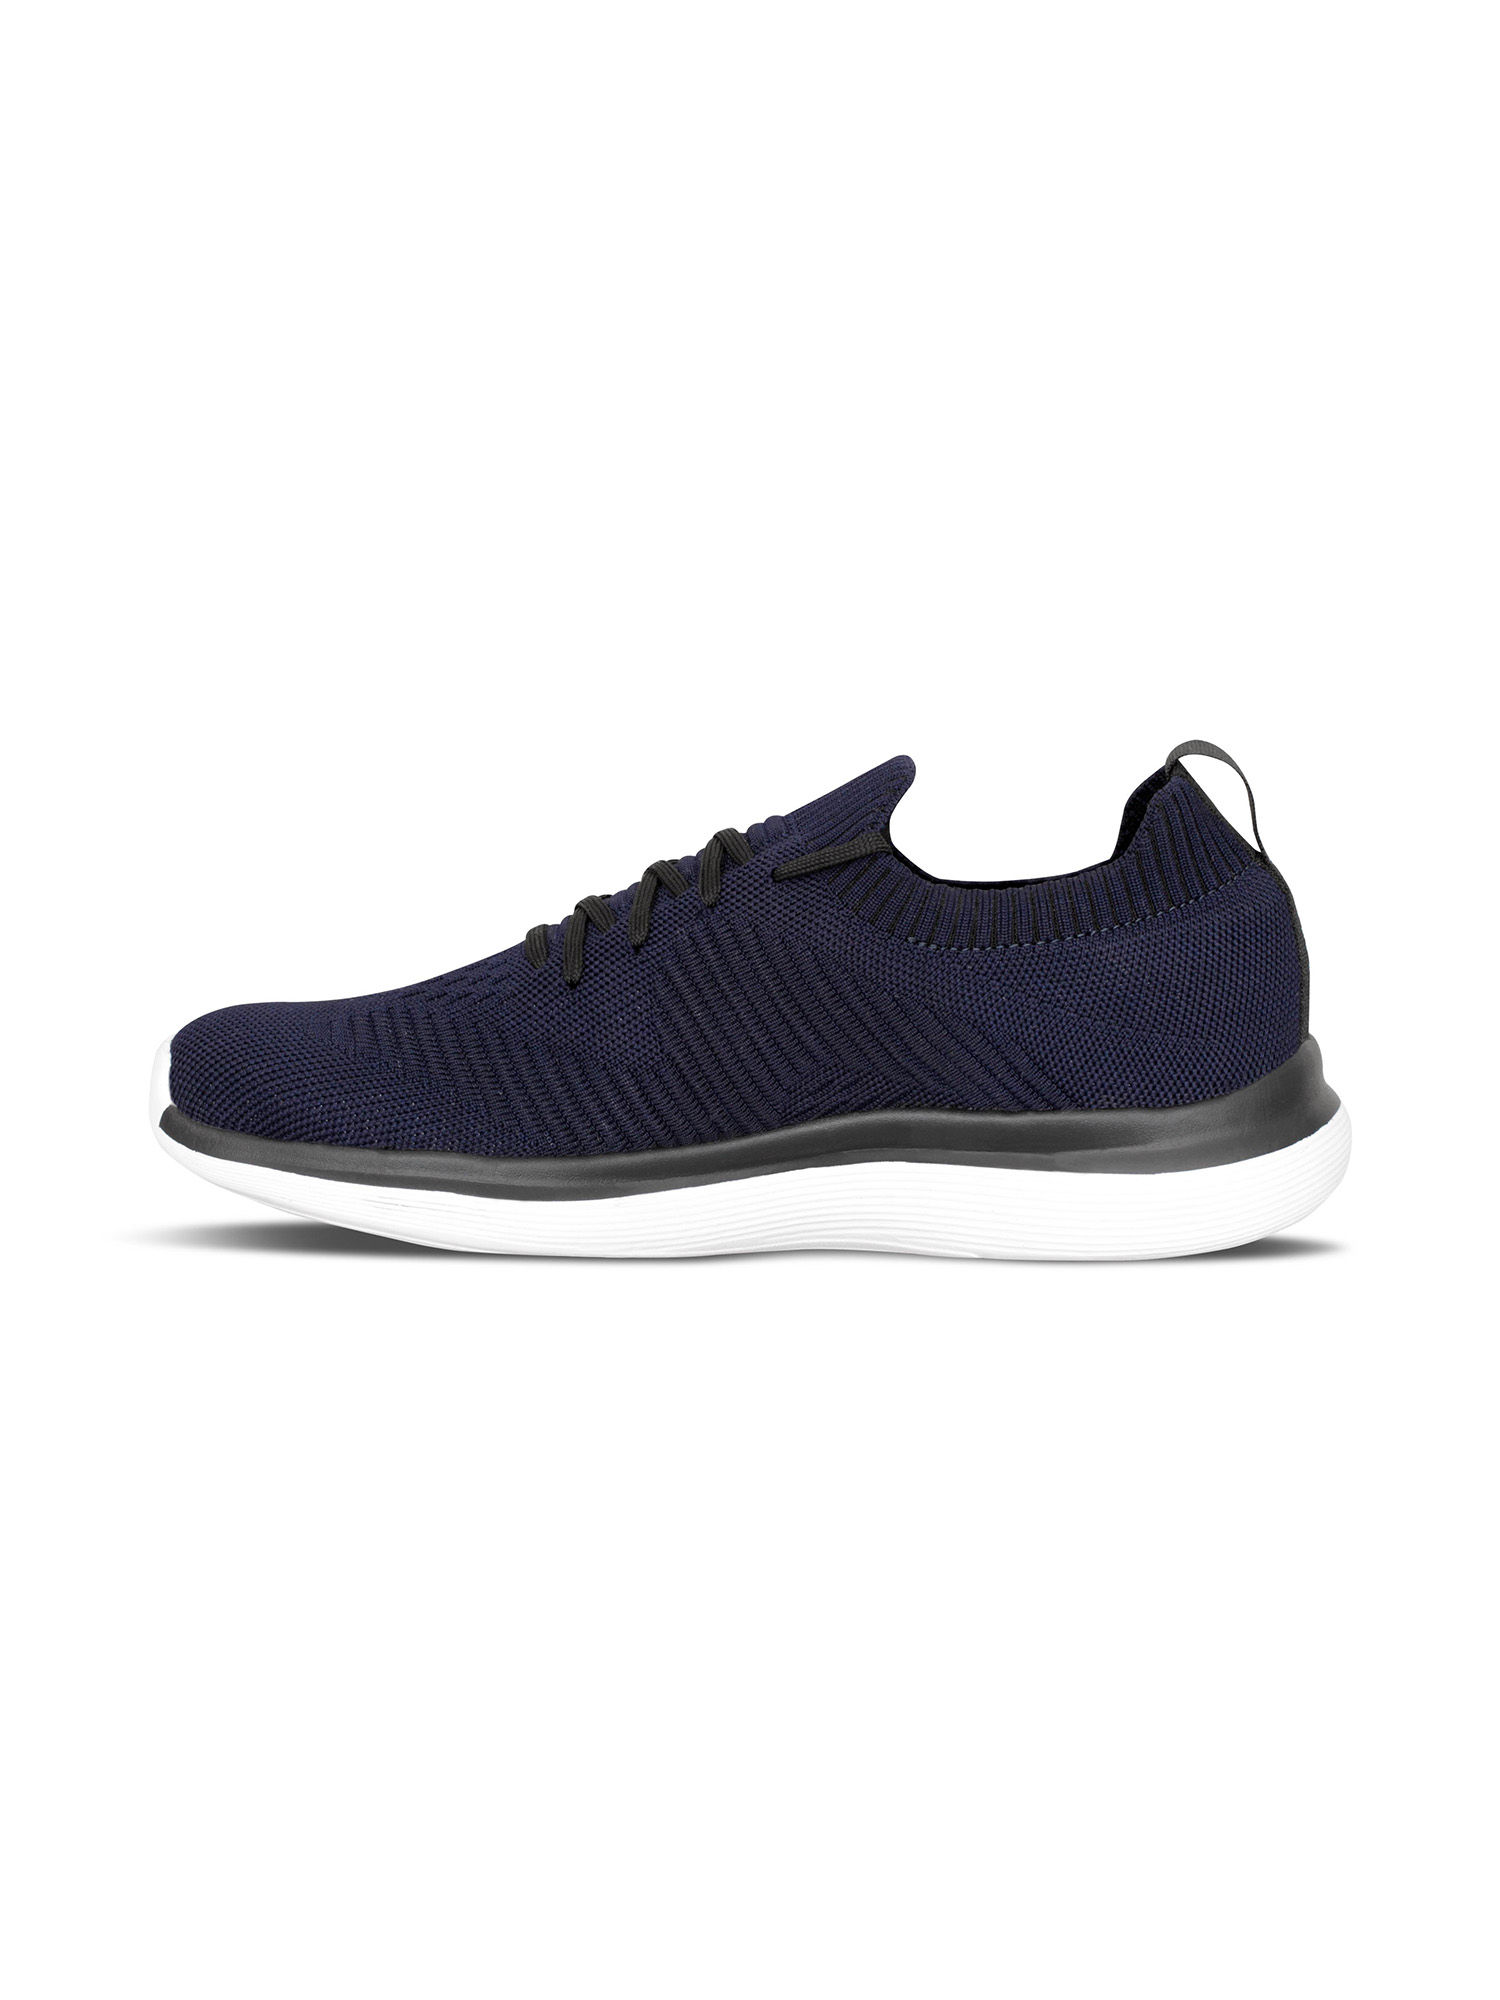 Nivia Navy Blue Endeavour 2.0 Running Shoes for Men: Buy Nivia Navy ...